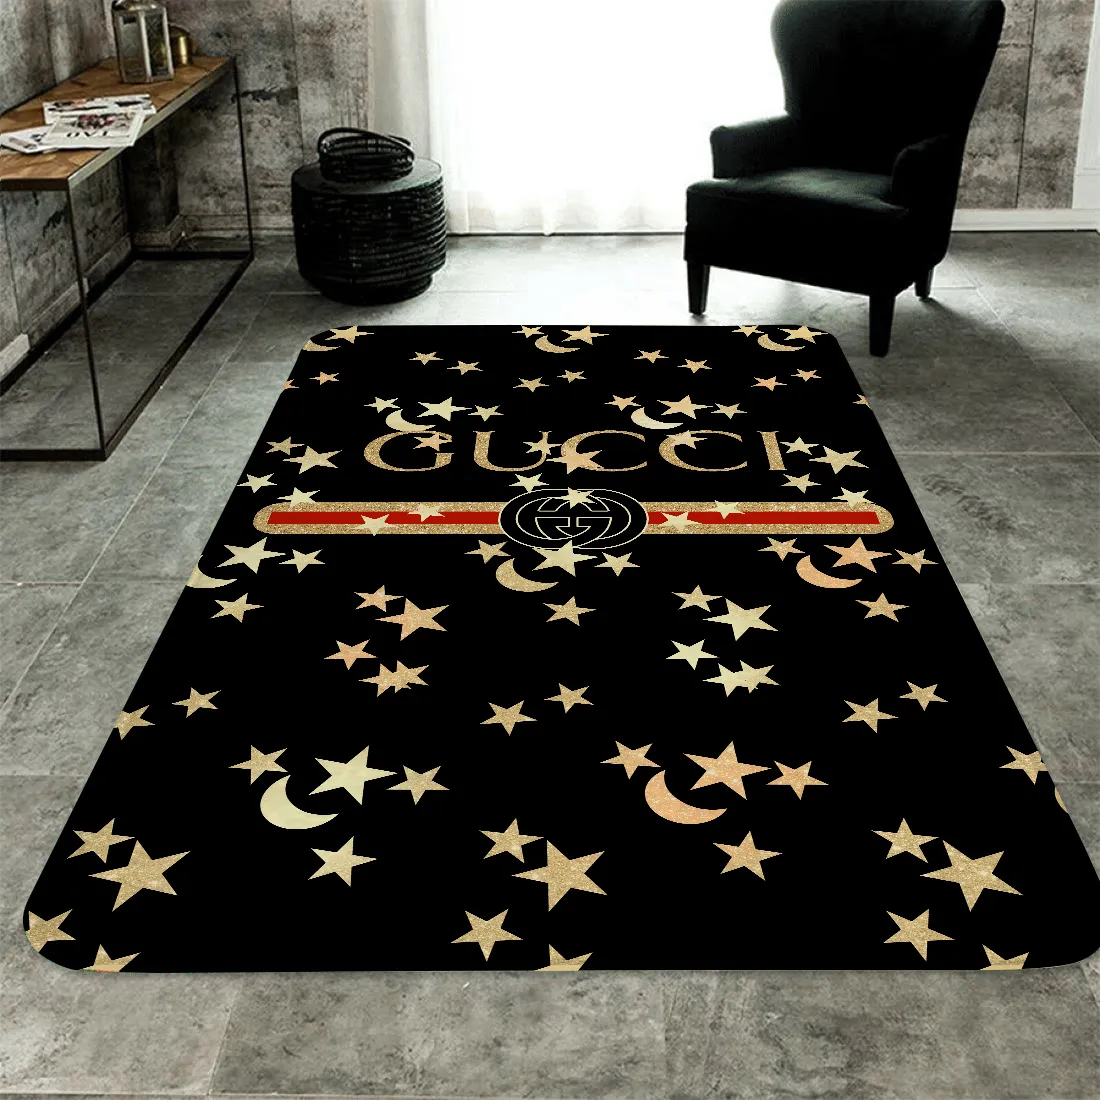 Gucci Moon Star Luxury Fashion Brand Rug Area Carpet Door Mat Home Decor